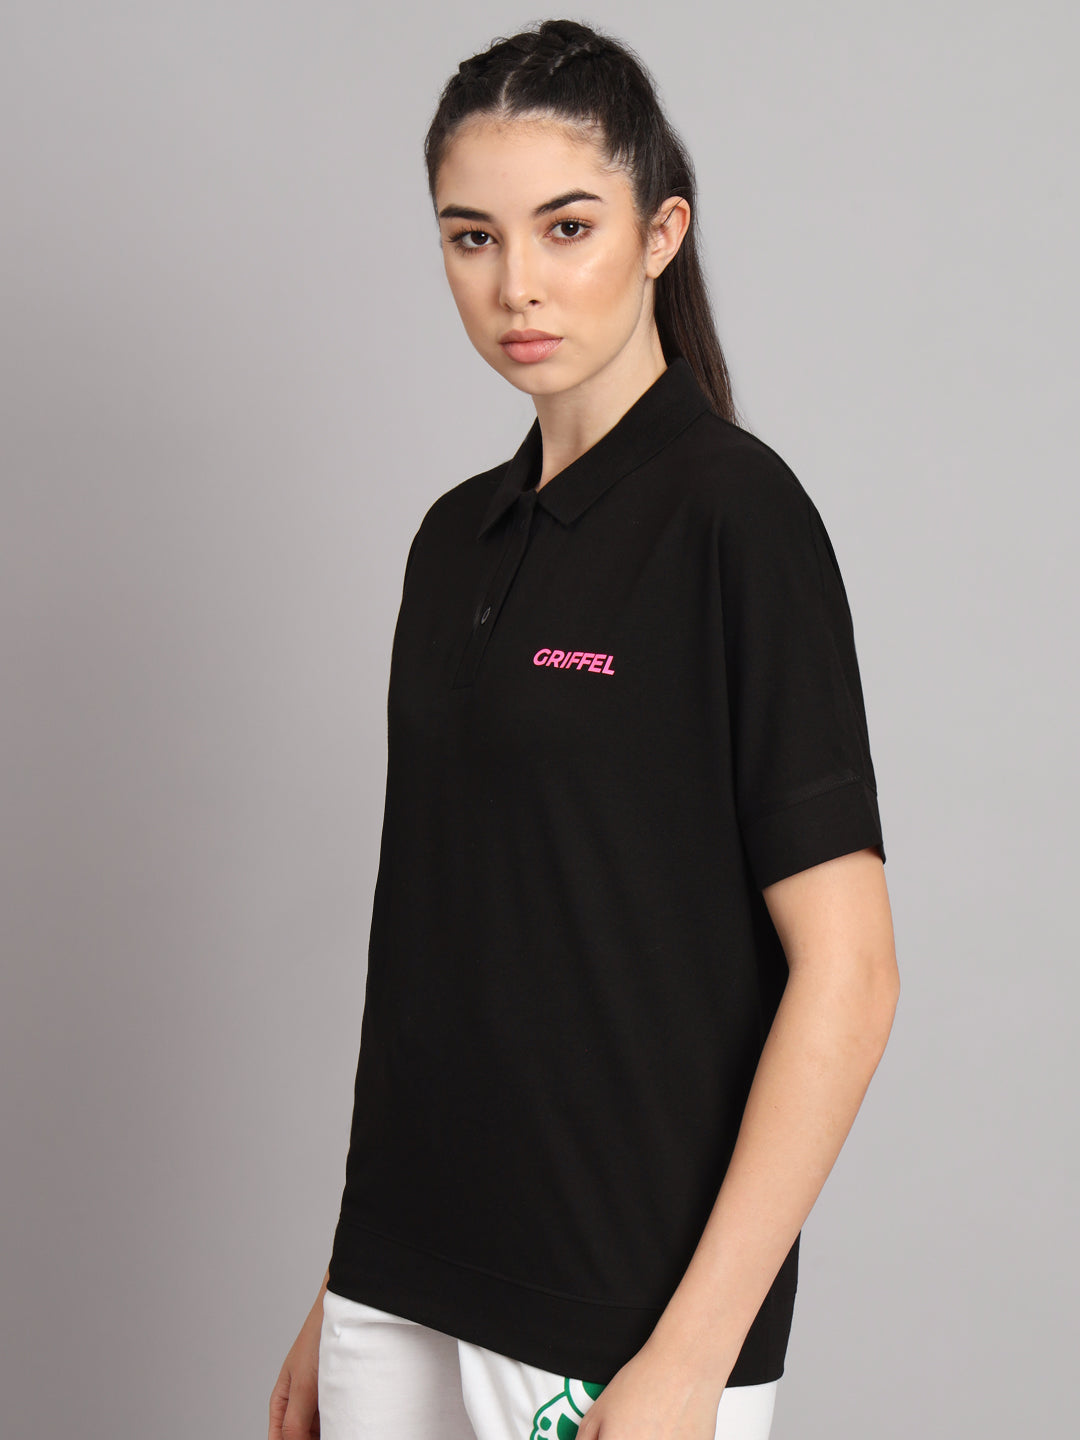 GRIFFEL Women Basic Solid Black Polo T-shirt - griffel